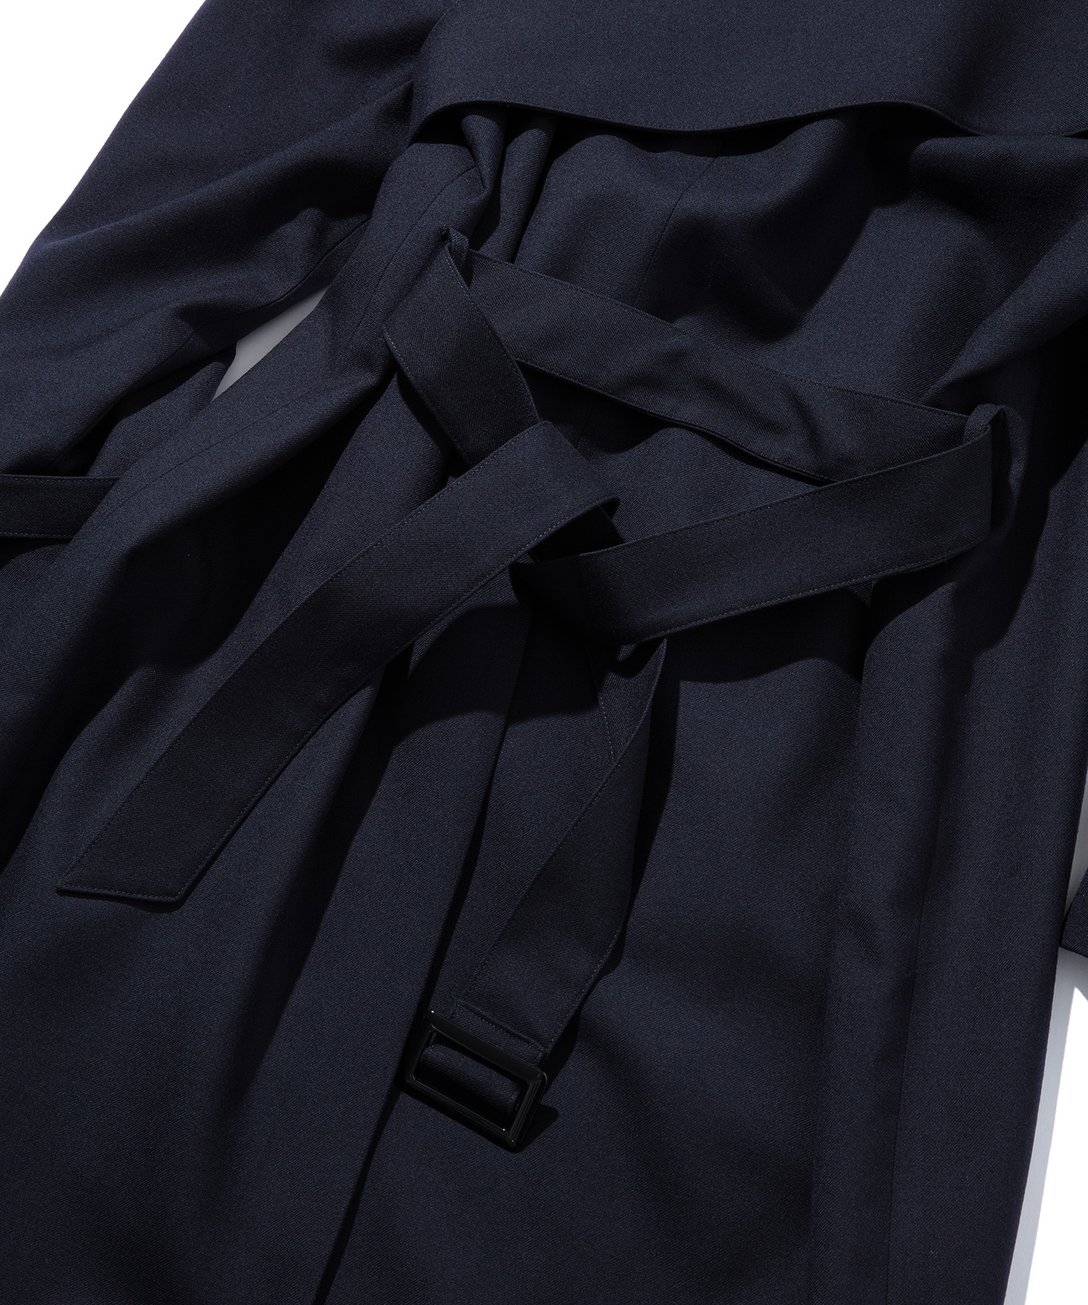 KEISUKEYOSHIDA ・ belted trench coat school uniform edition